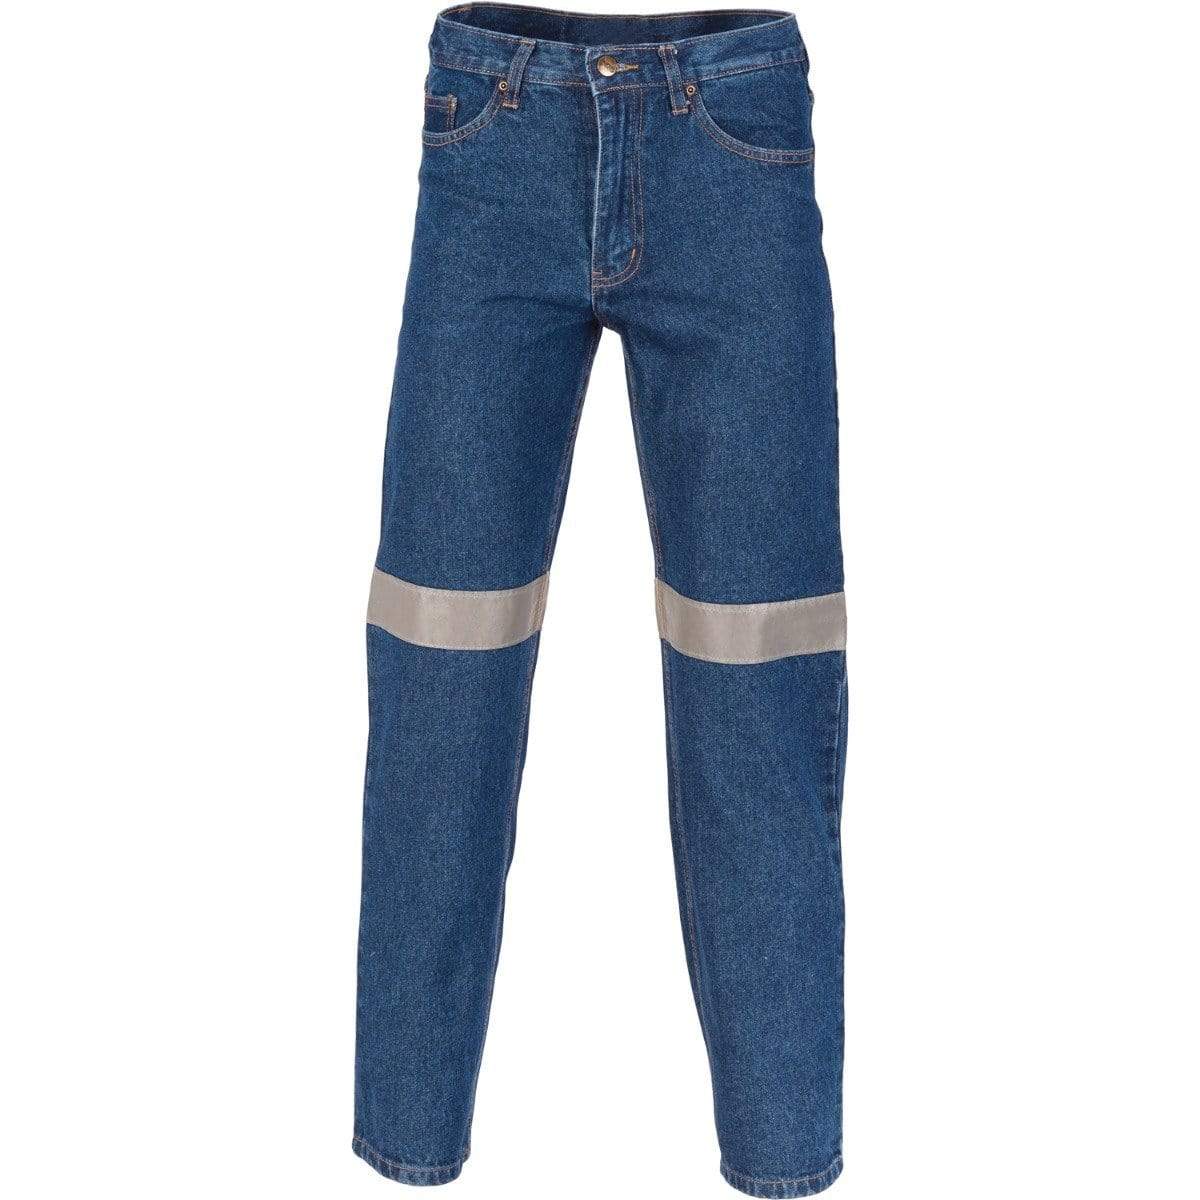 Dnc Workwear Taped Denim Stretch Jeans - 3347 Work Wear DNC Workwear Blue 72R 